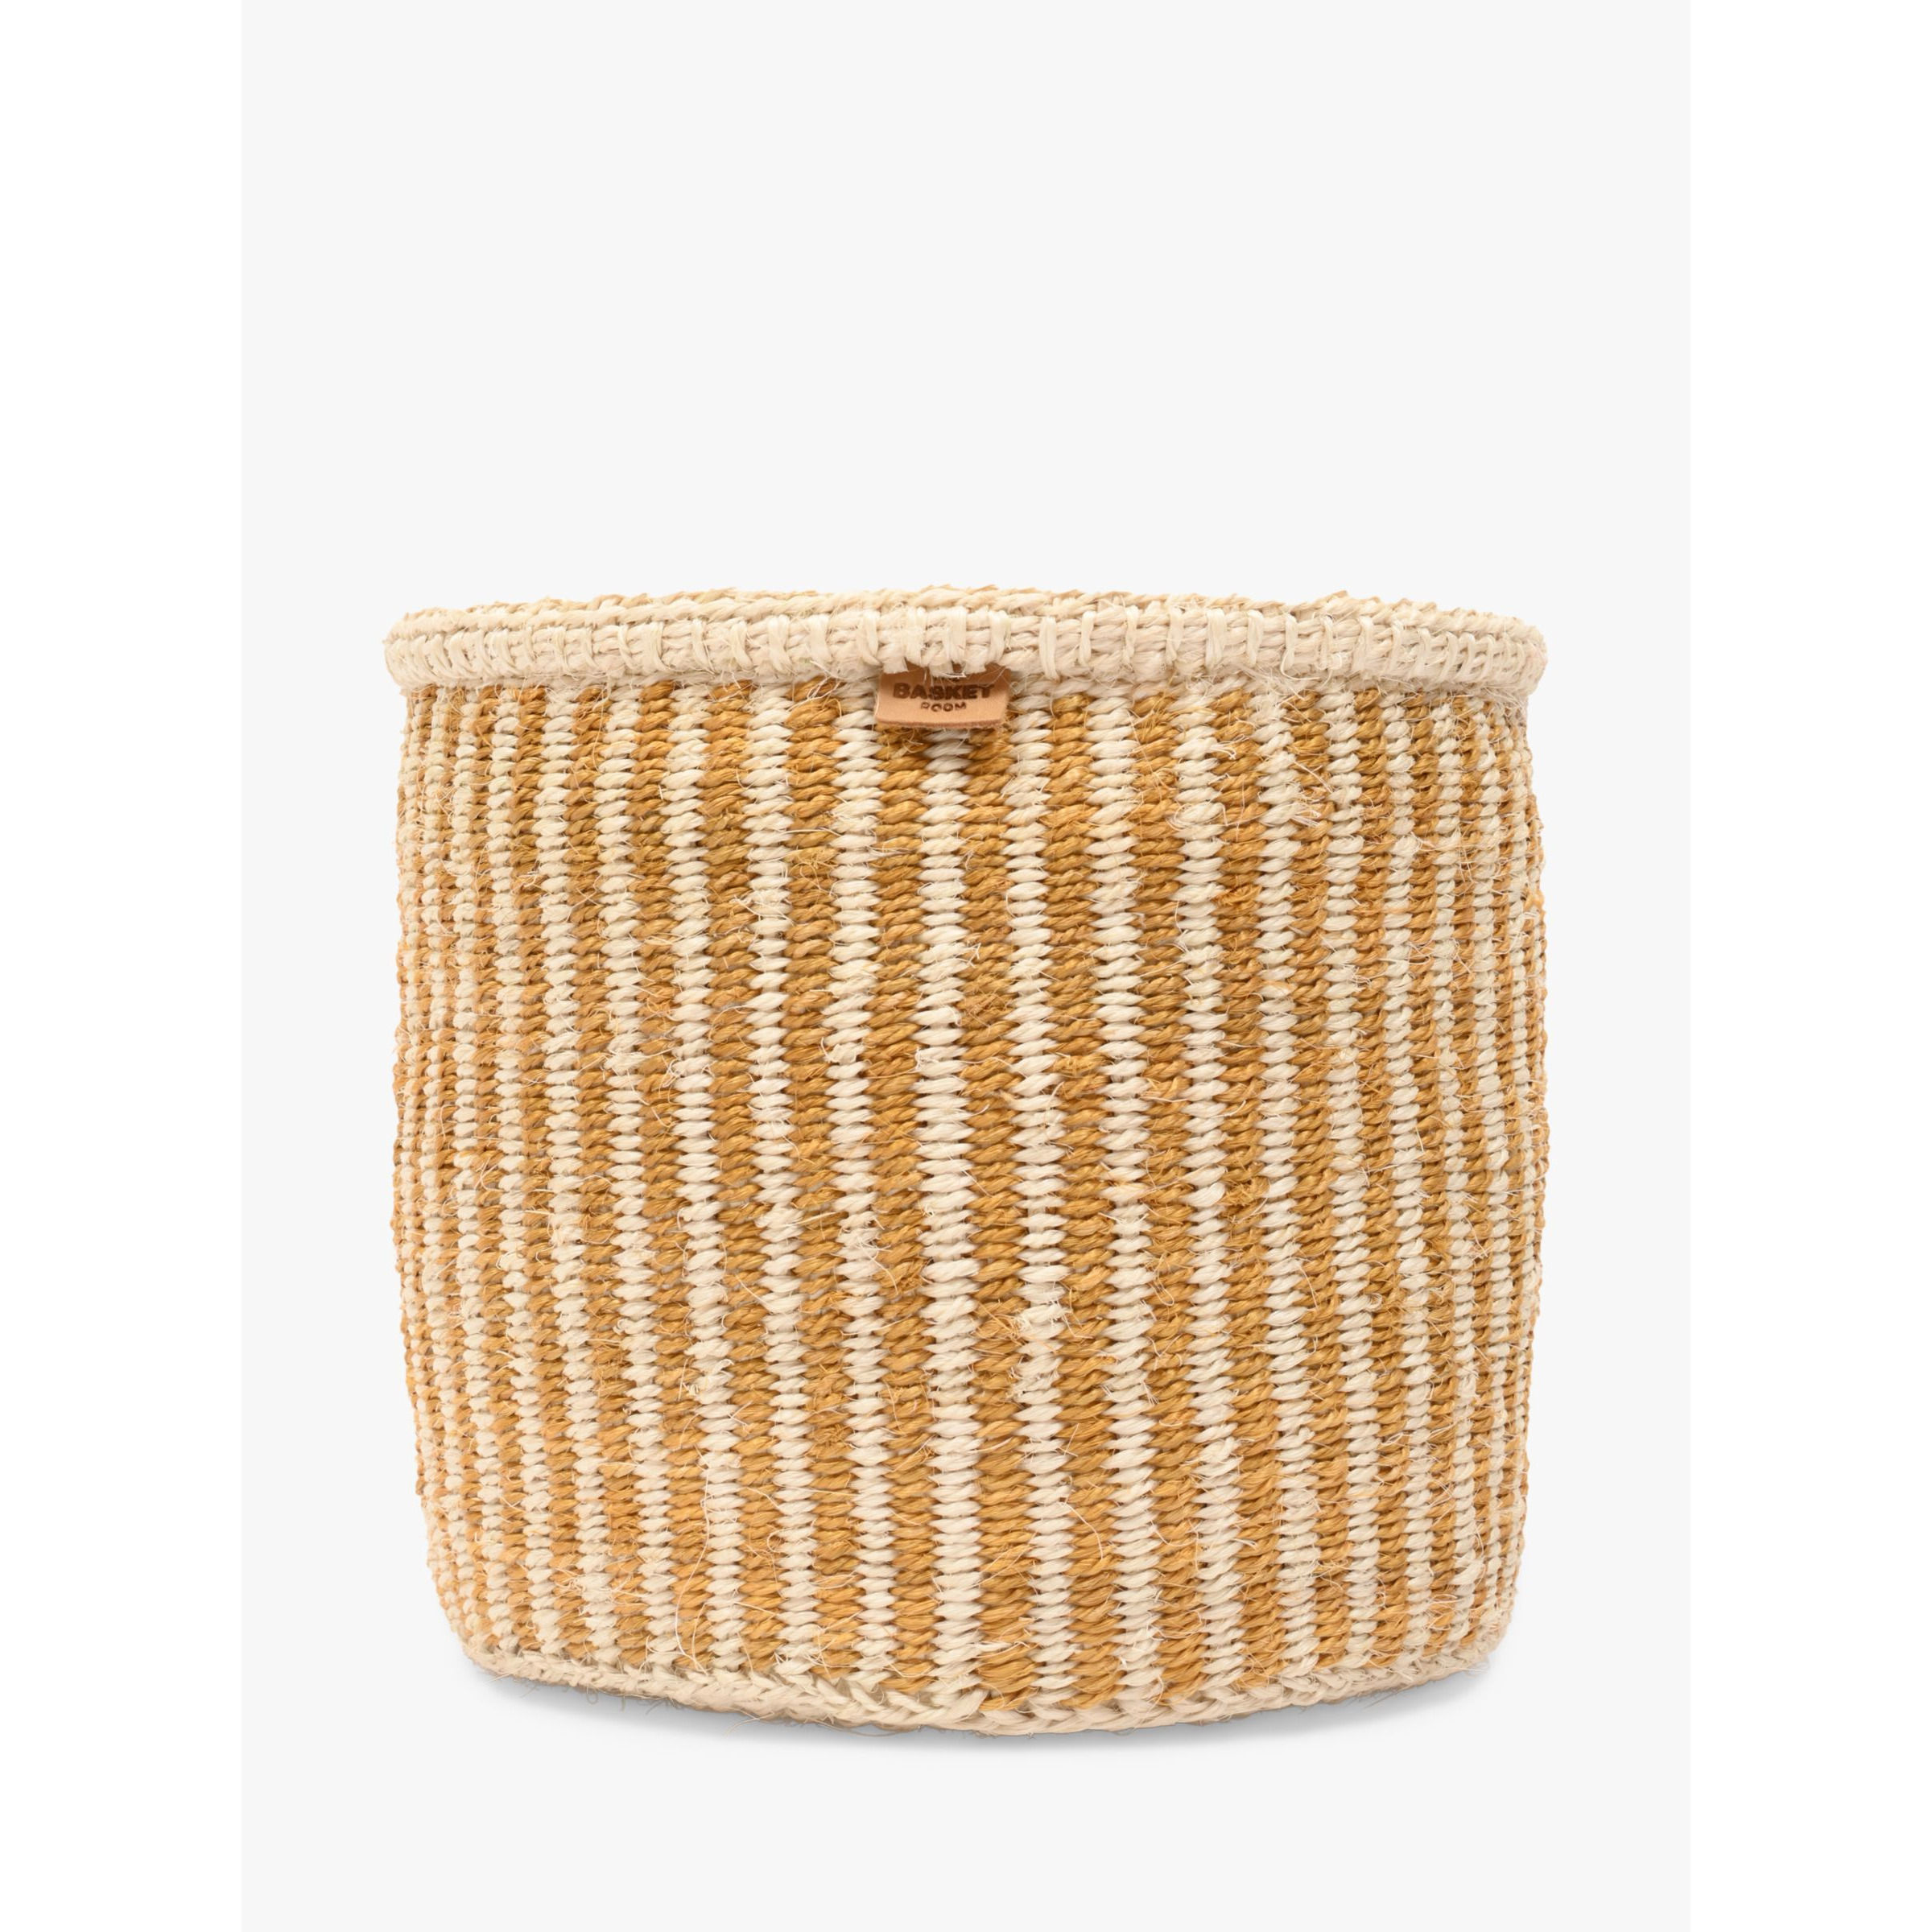 The Basket Room Hotuba Woven Storage Basket, Gold Stripe, Medium - image 1